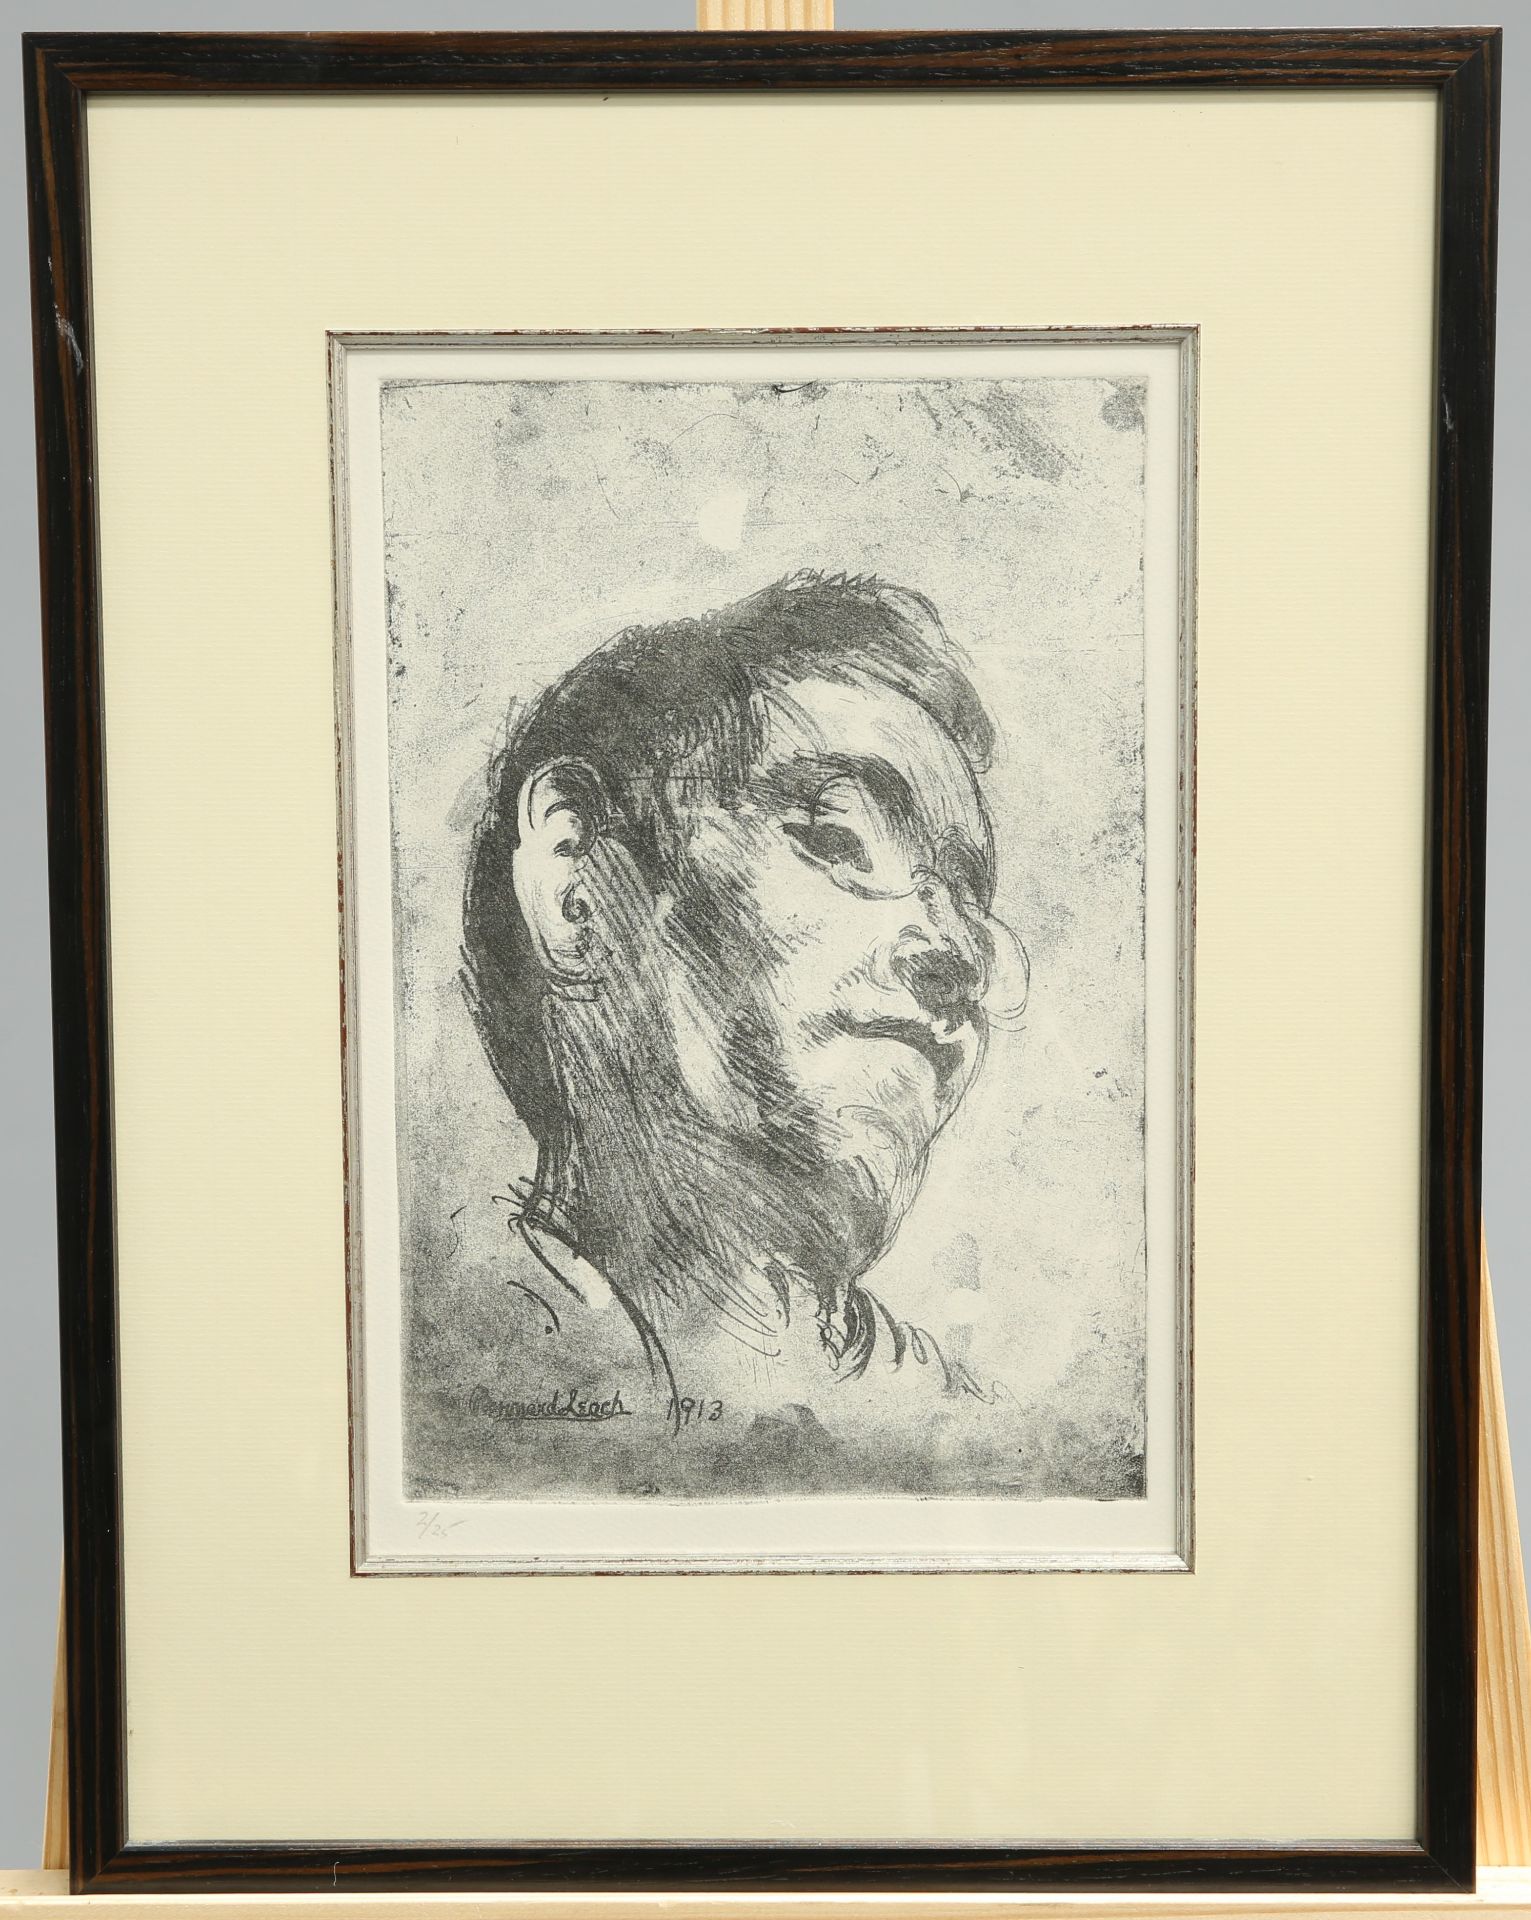 BERNARD LEACH (1887-1979), PORTRAIT OF RYUSEI KISHIDA, 1913, posthumously printed soft ground